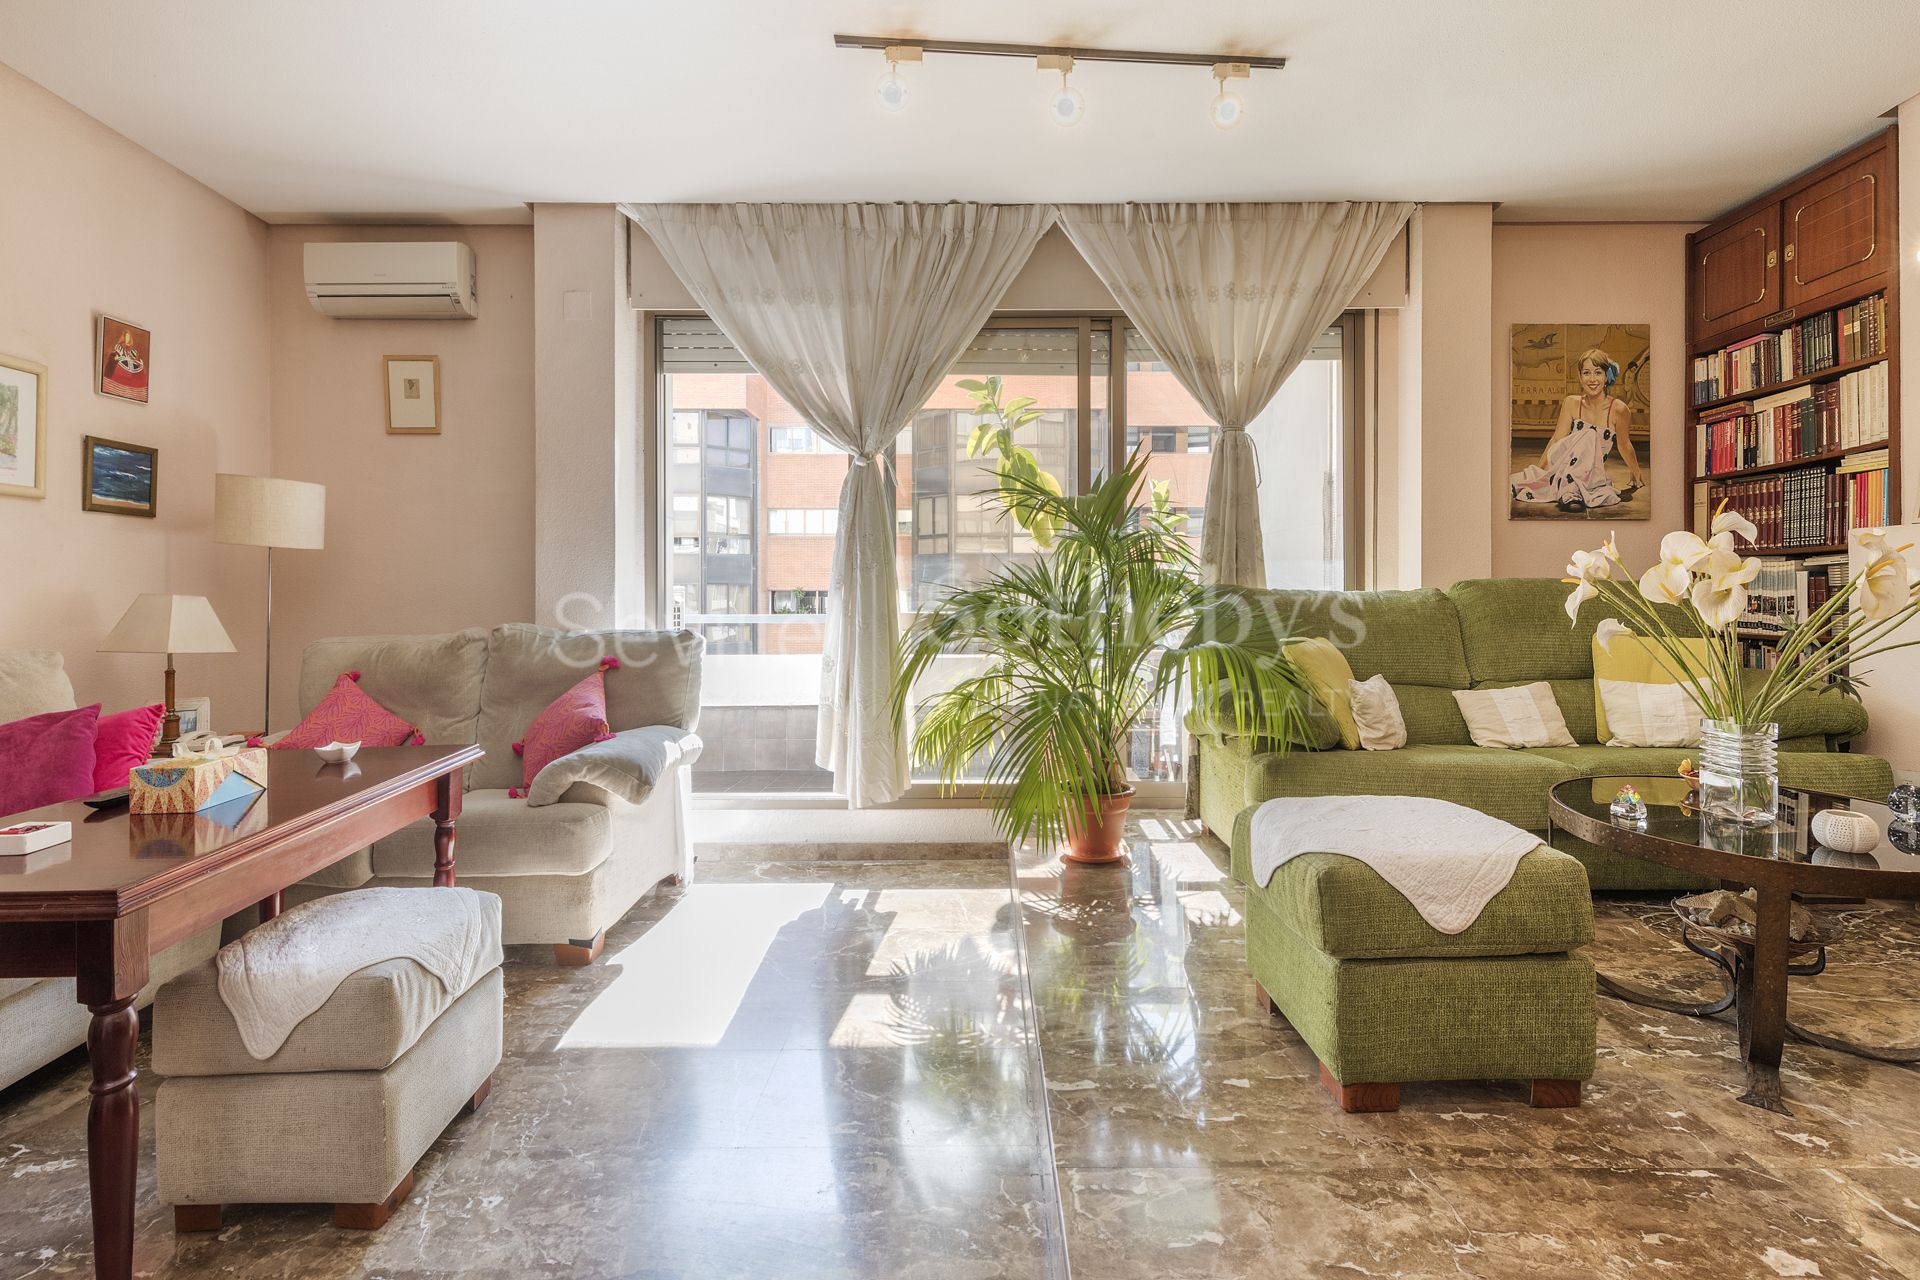 Spacious apartment with terrace in Republica Argentina